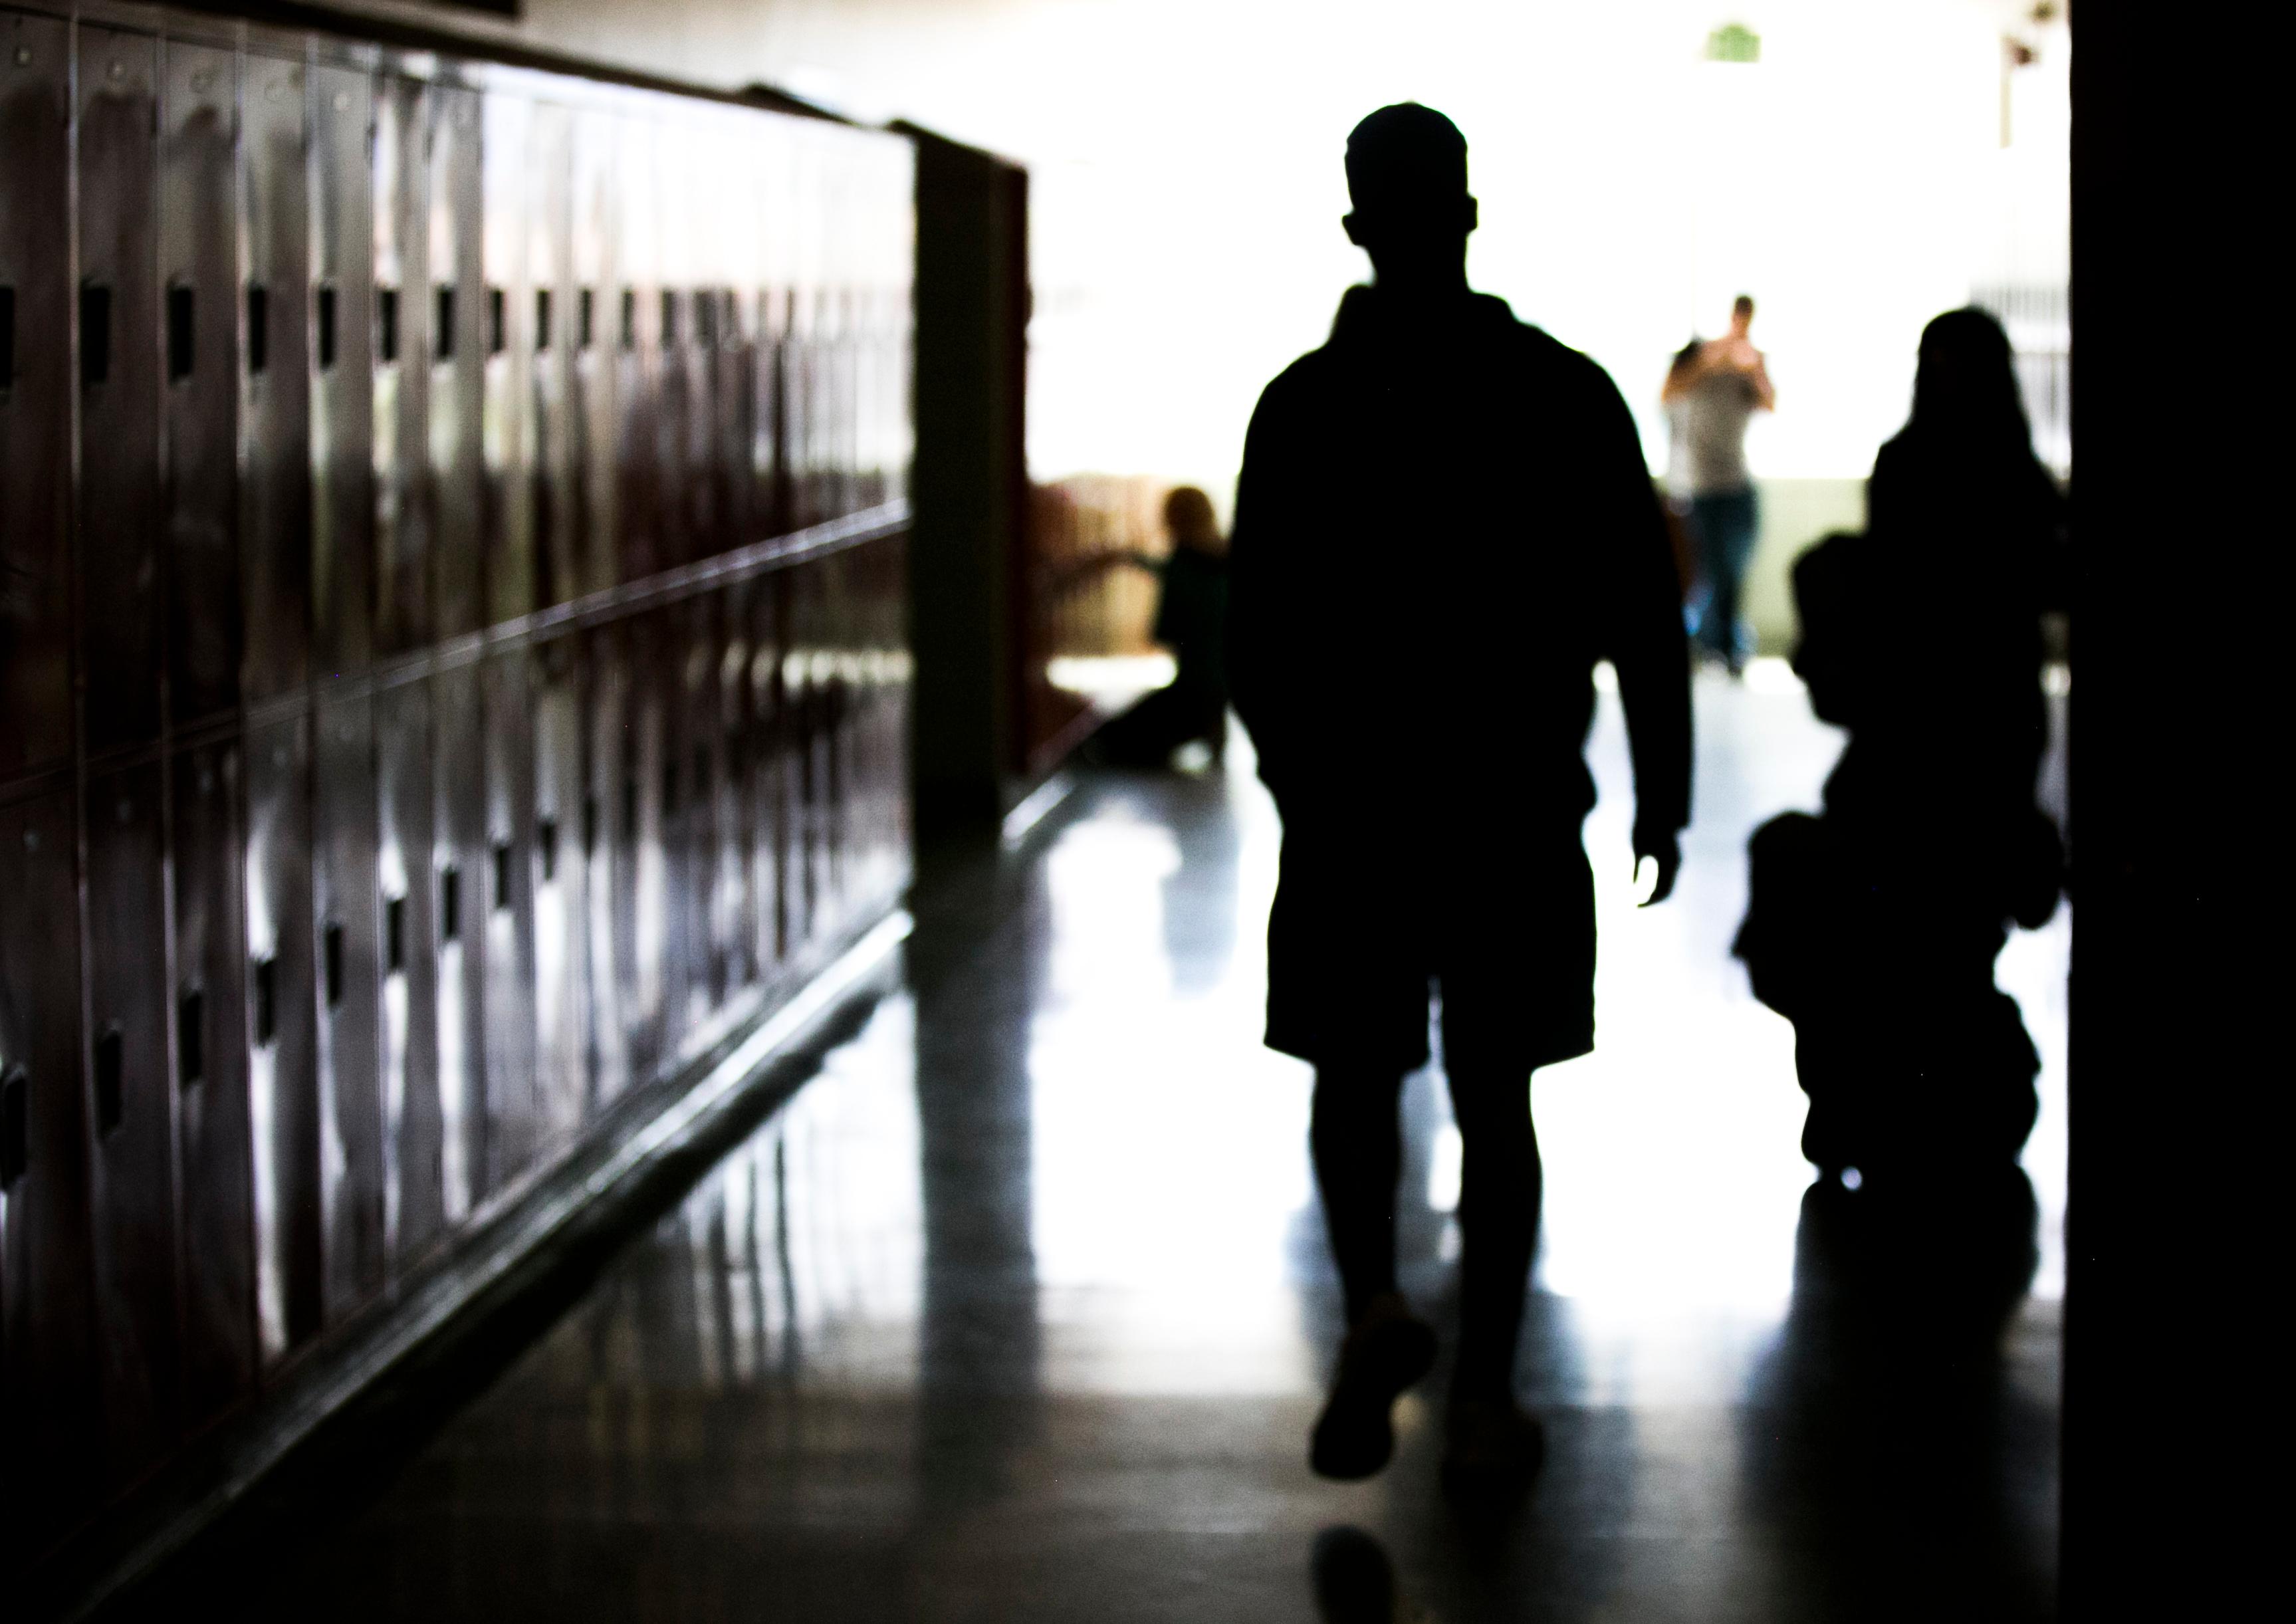 Grand Junction High School student walks down a hallway